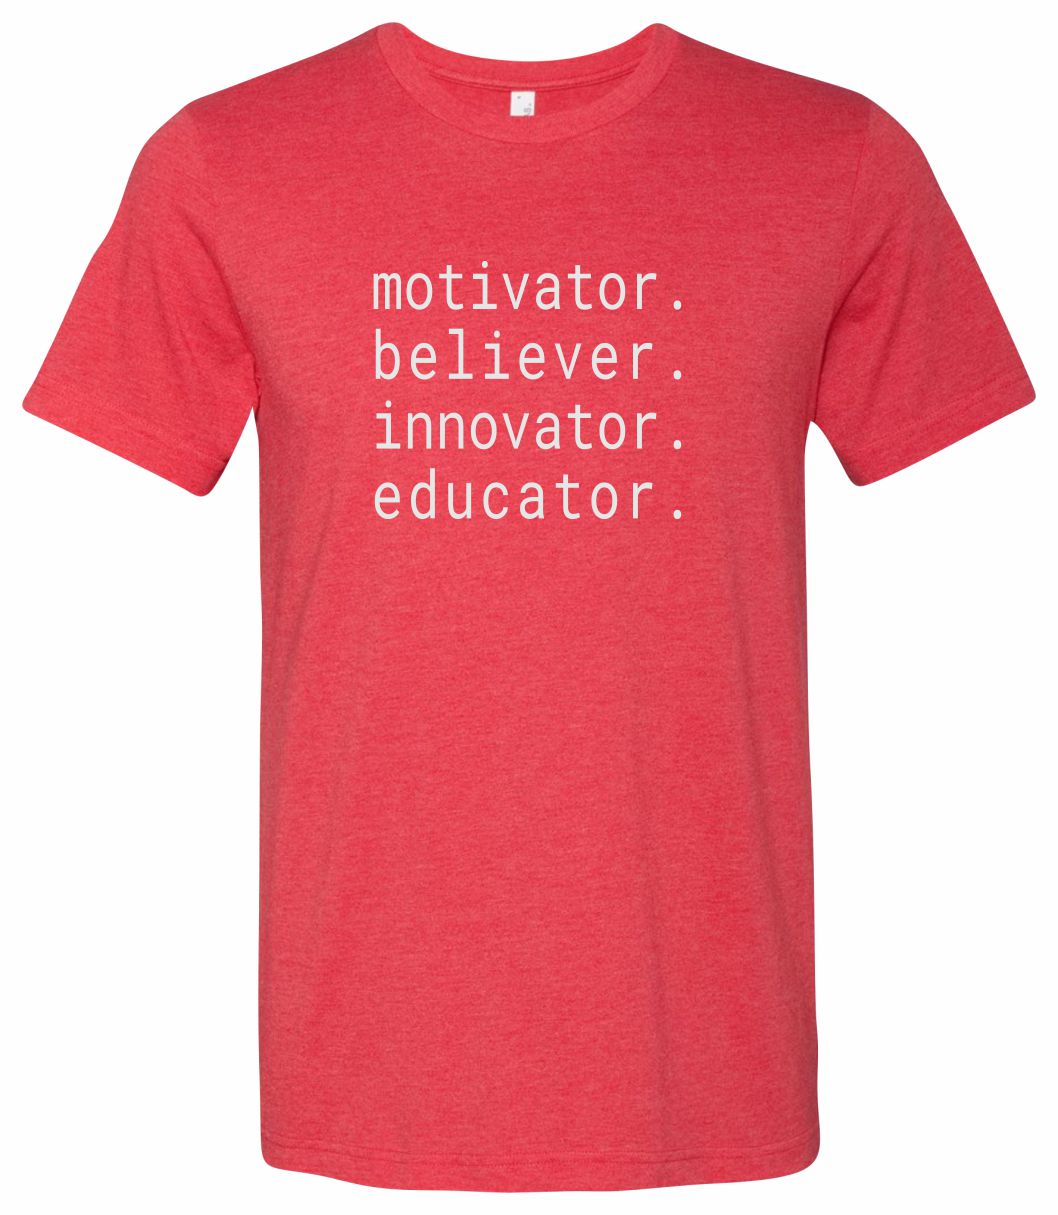 Motivator, Believer, Innovator, Educator Short Sleeve Graphic T-shirt